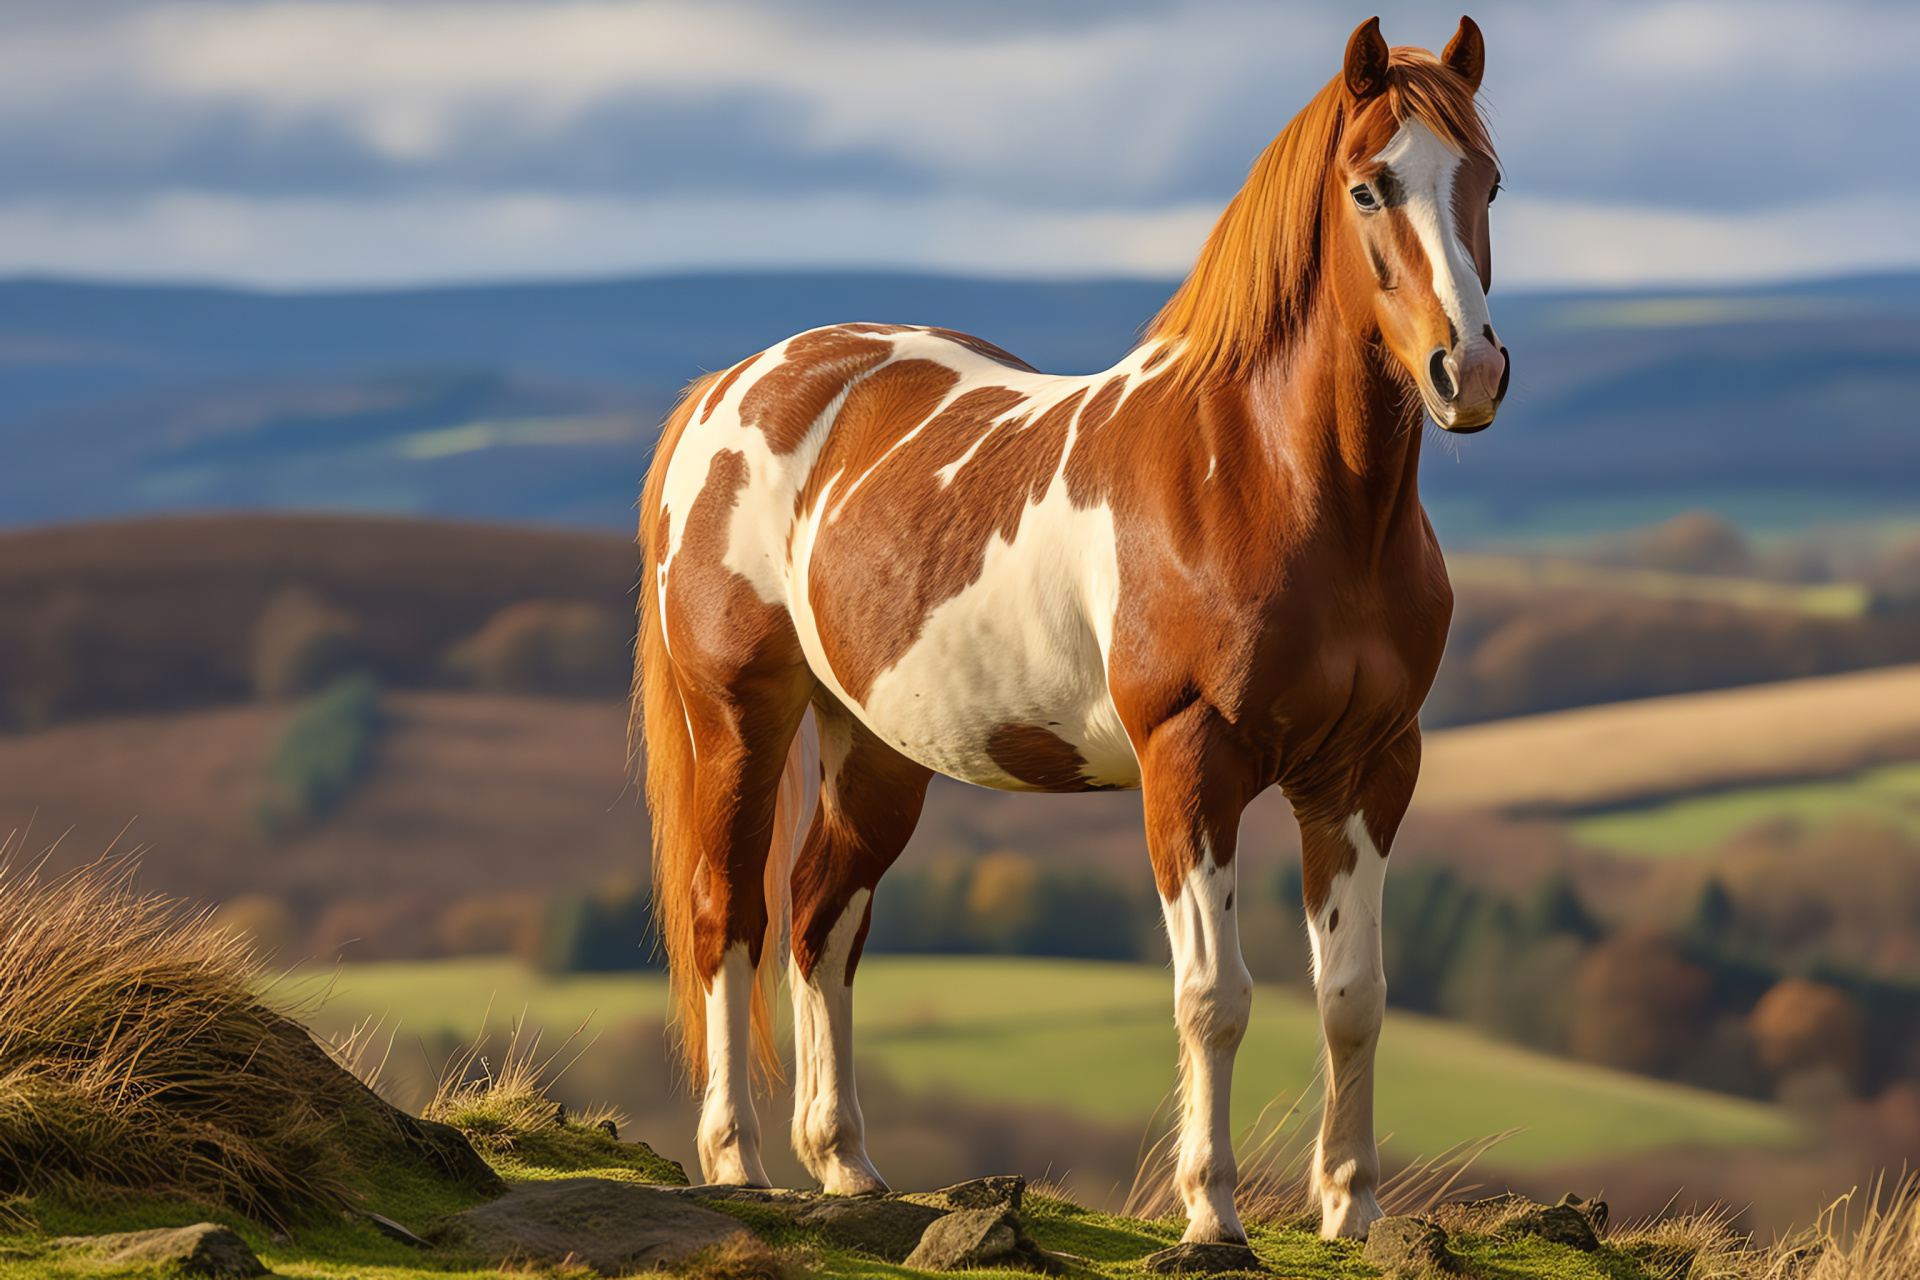 Dappled Mare, Pastoral scene, Equine gentleness, Horse grazing, Equestrian lifestyle, HD Desktop Image